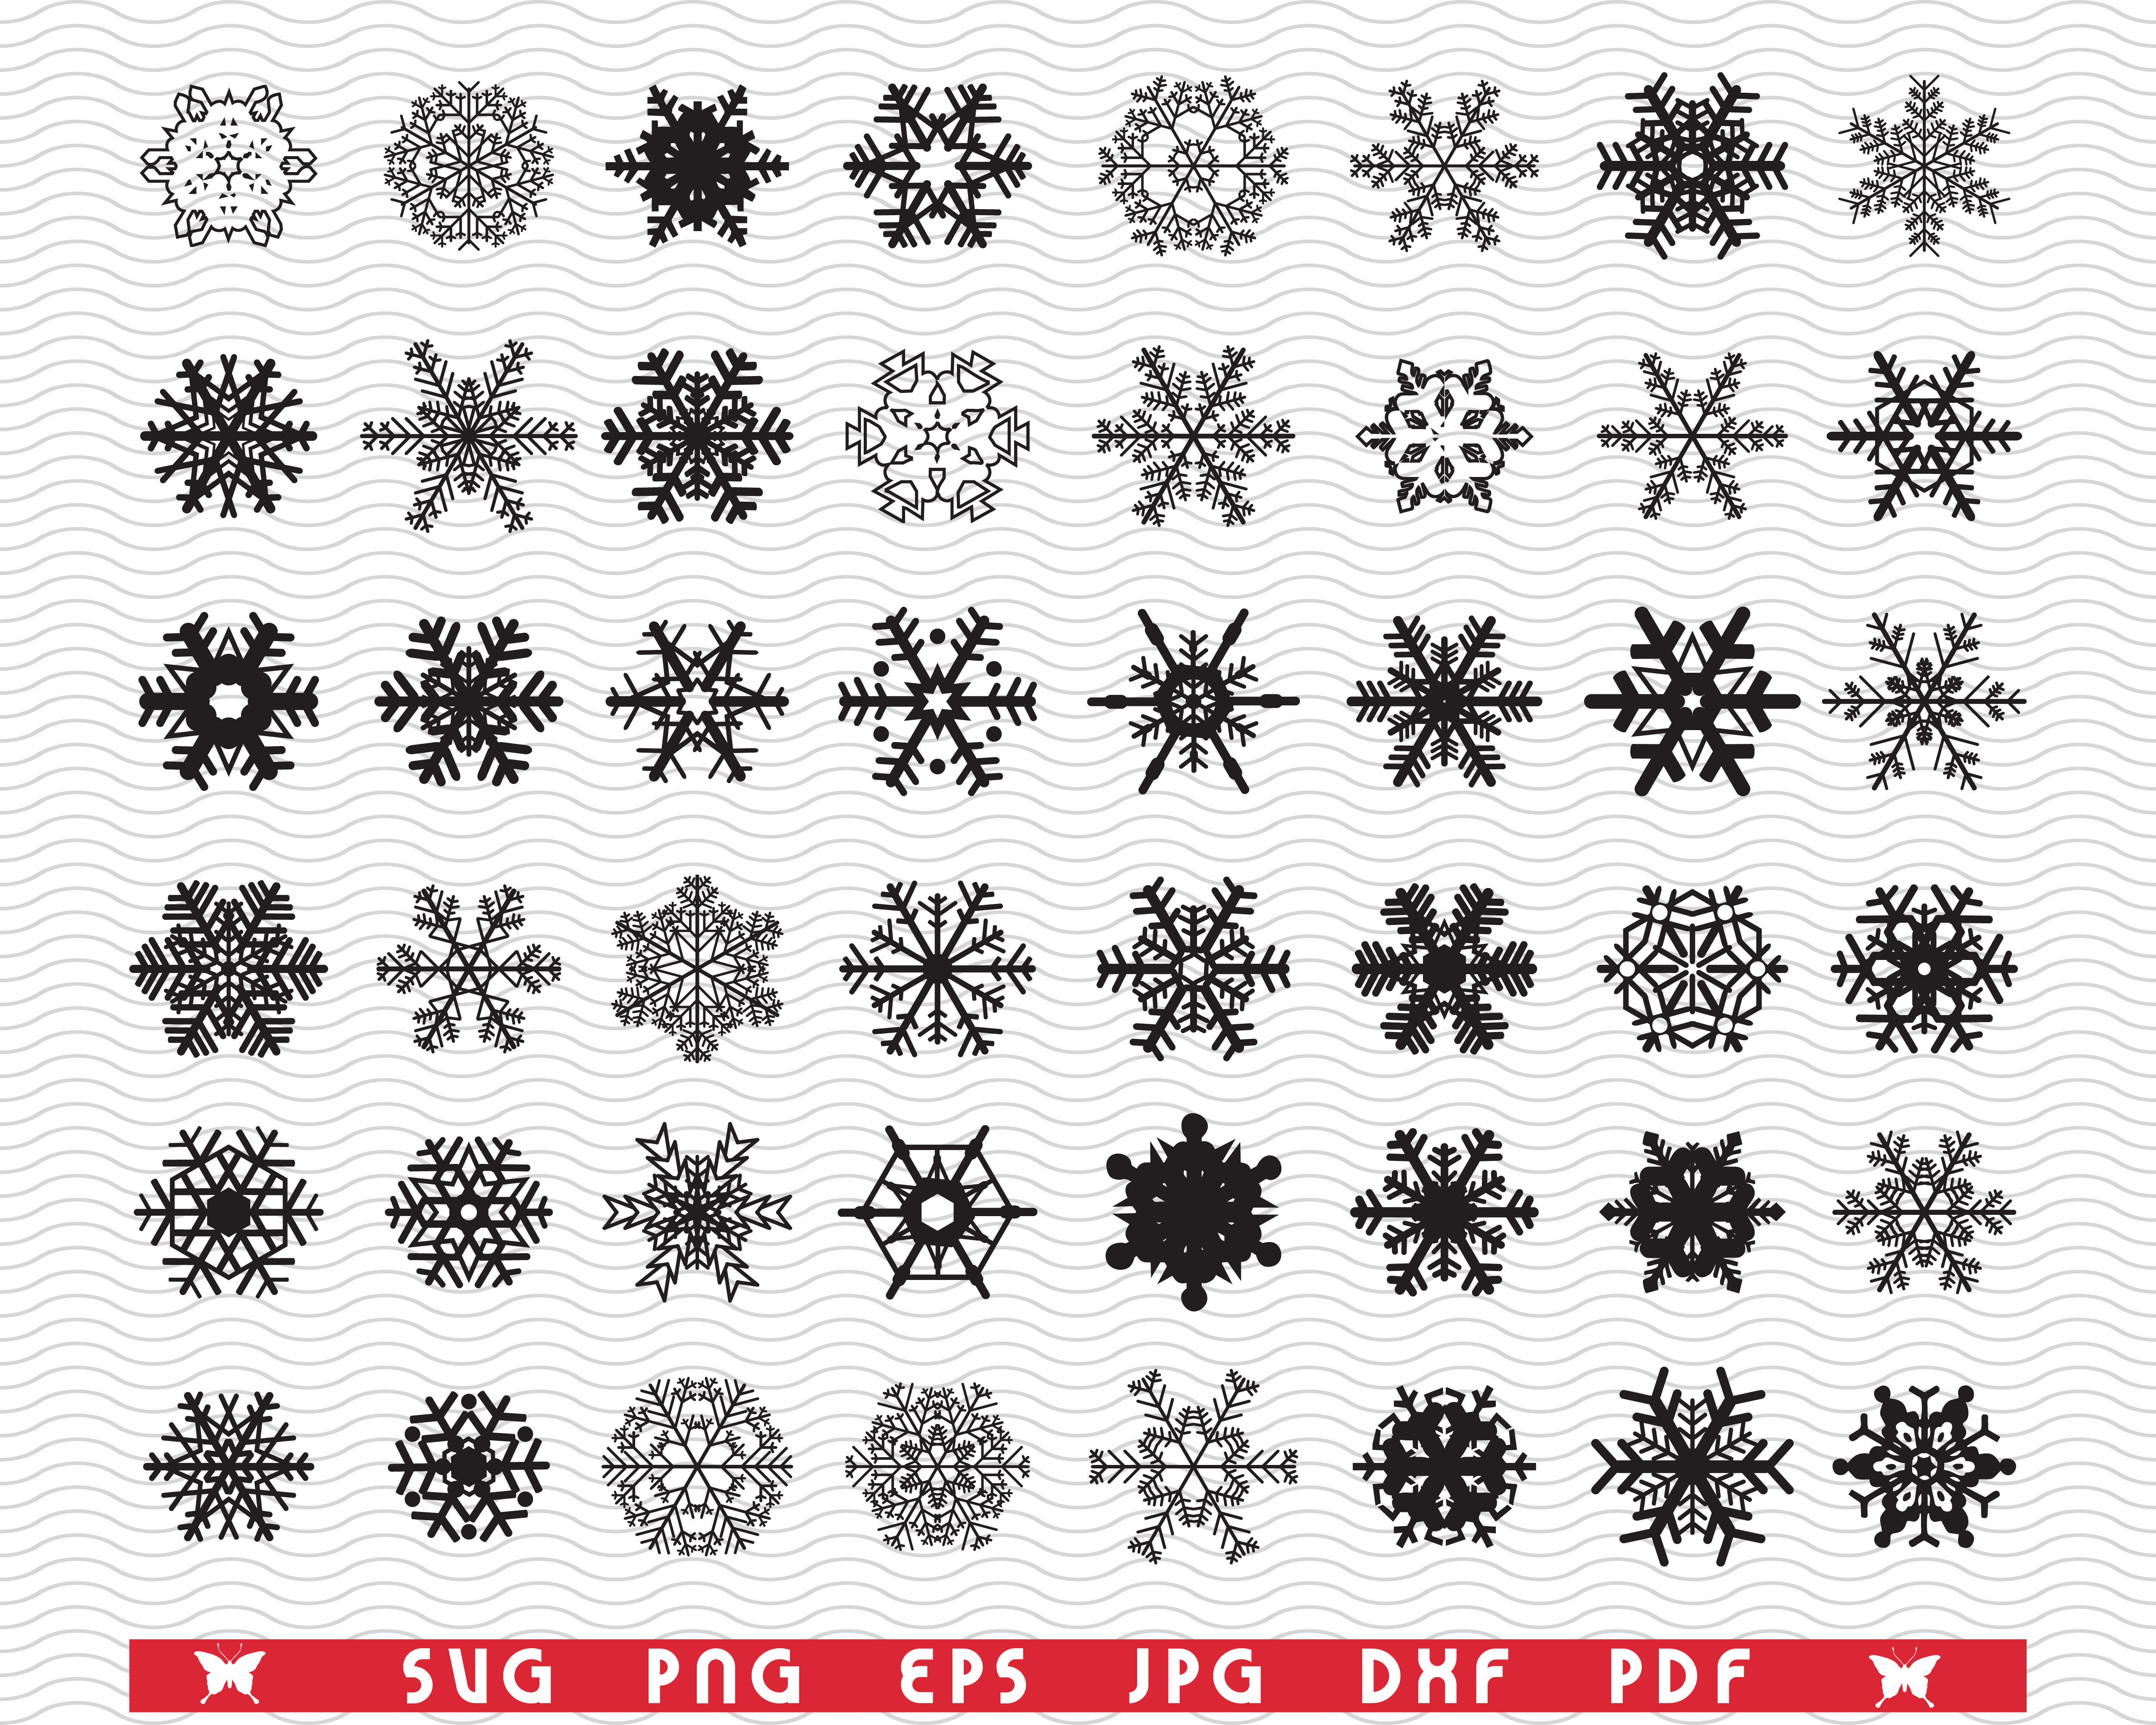 Svg Snowflakes Black Silhouettes Digital Clipart By Designstudiorm Thehungryjpeg Com